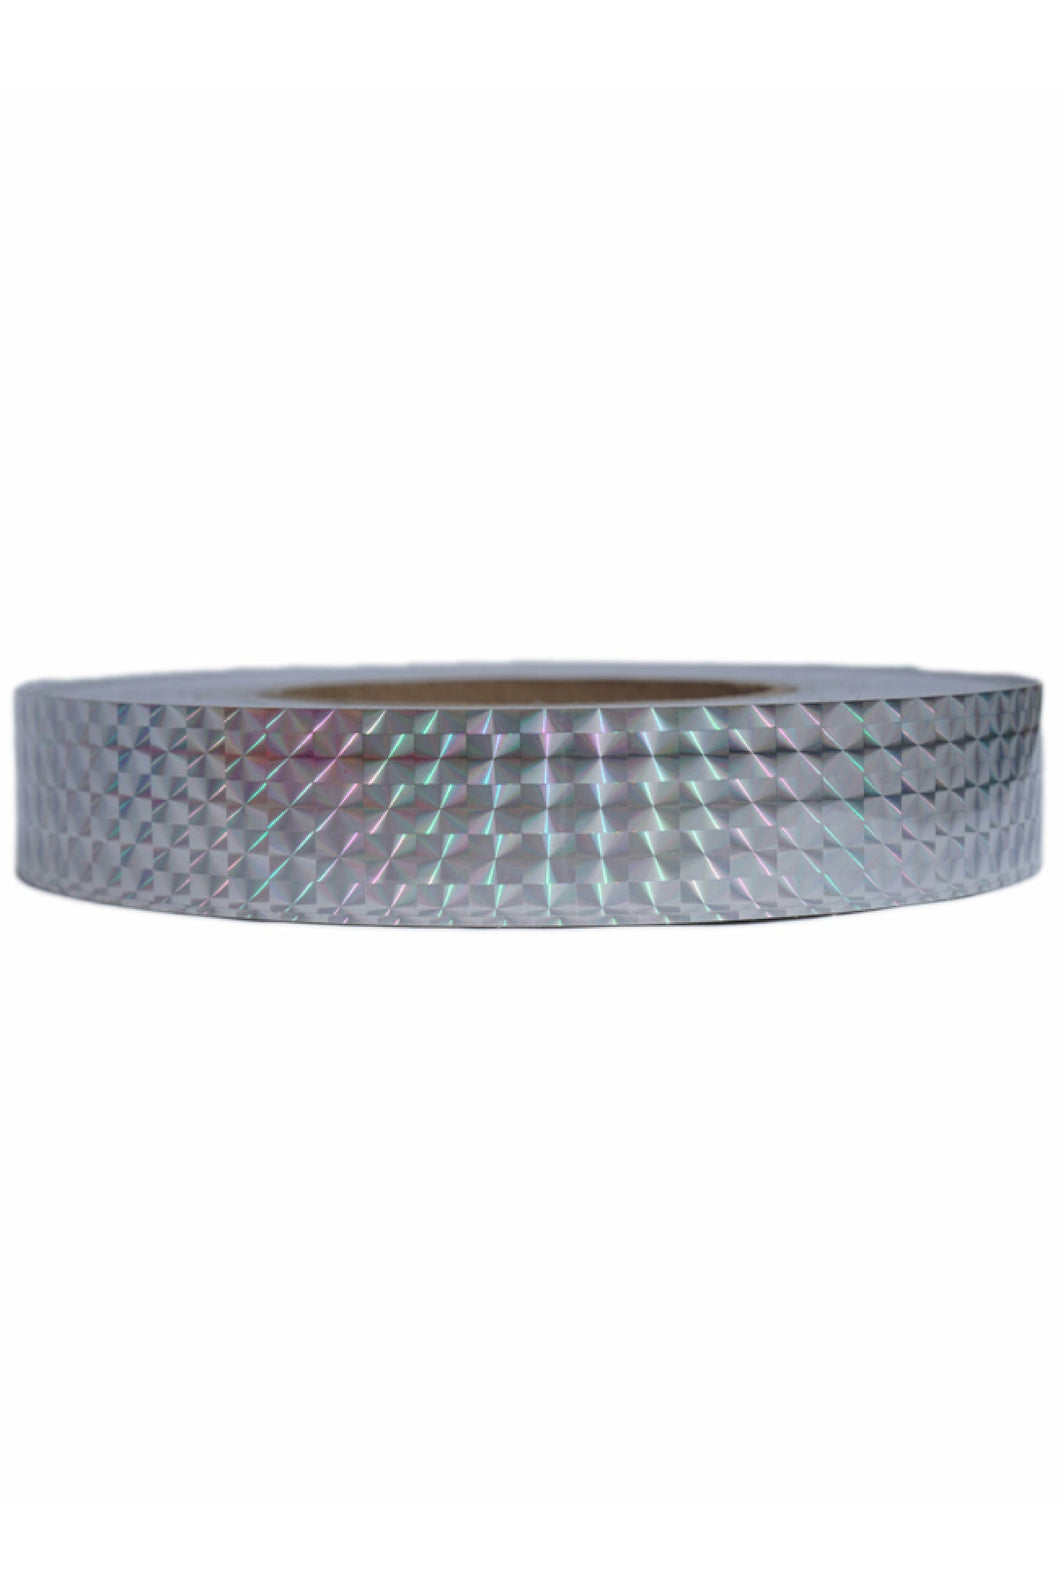 Prism Tape Styleplusband